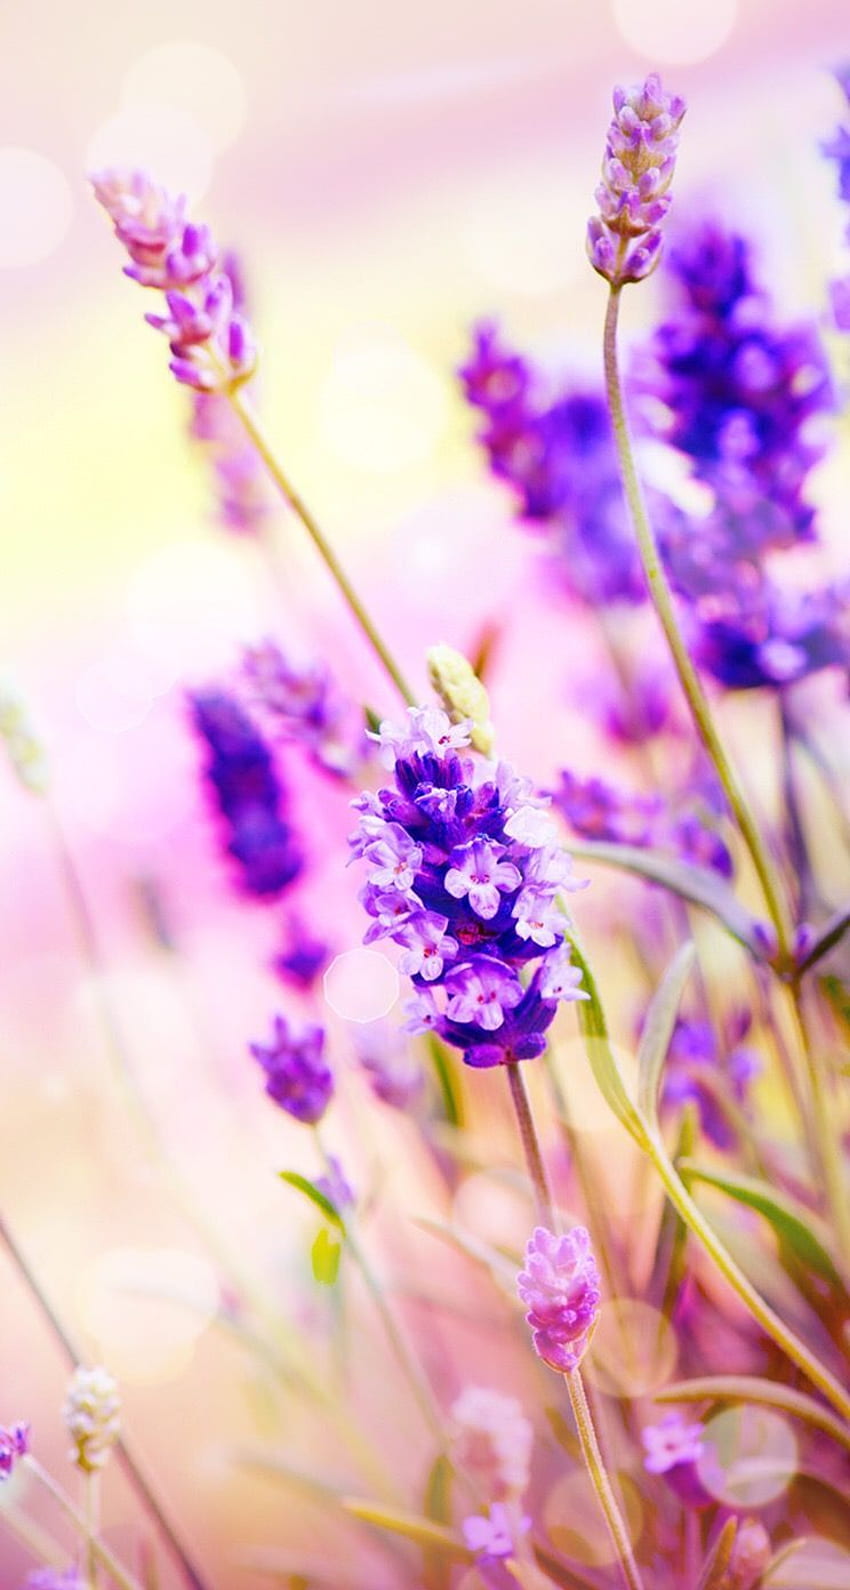 Pin oleh Rachel Merrie di Naturaleza. grafi alam, Bunga mentiroso, Latar belakang, Lavender Floral fondo de pantalla del teléfono